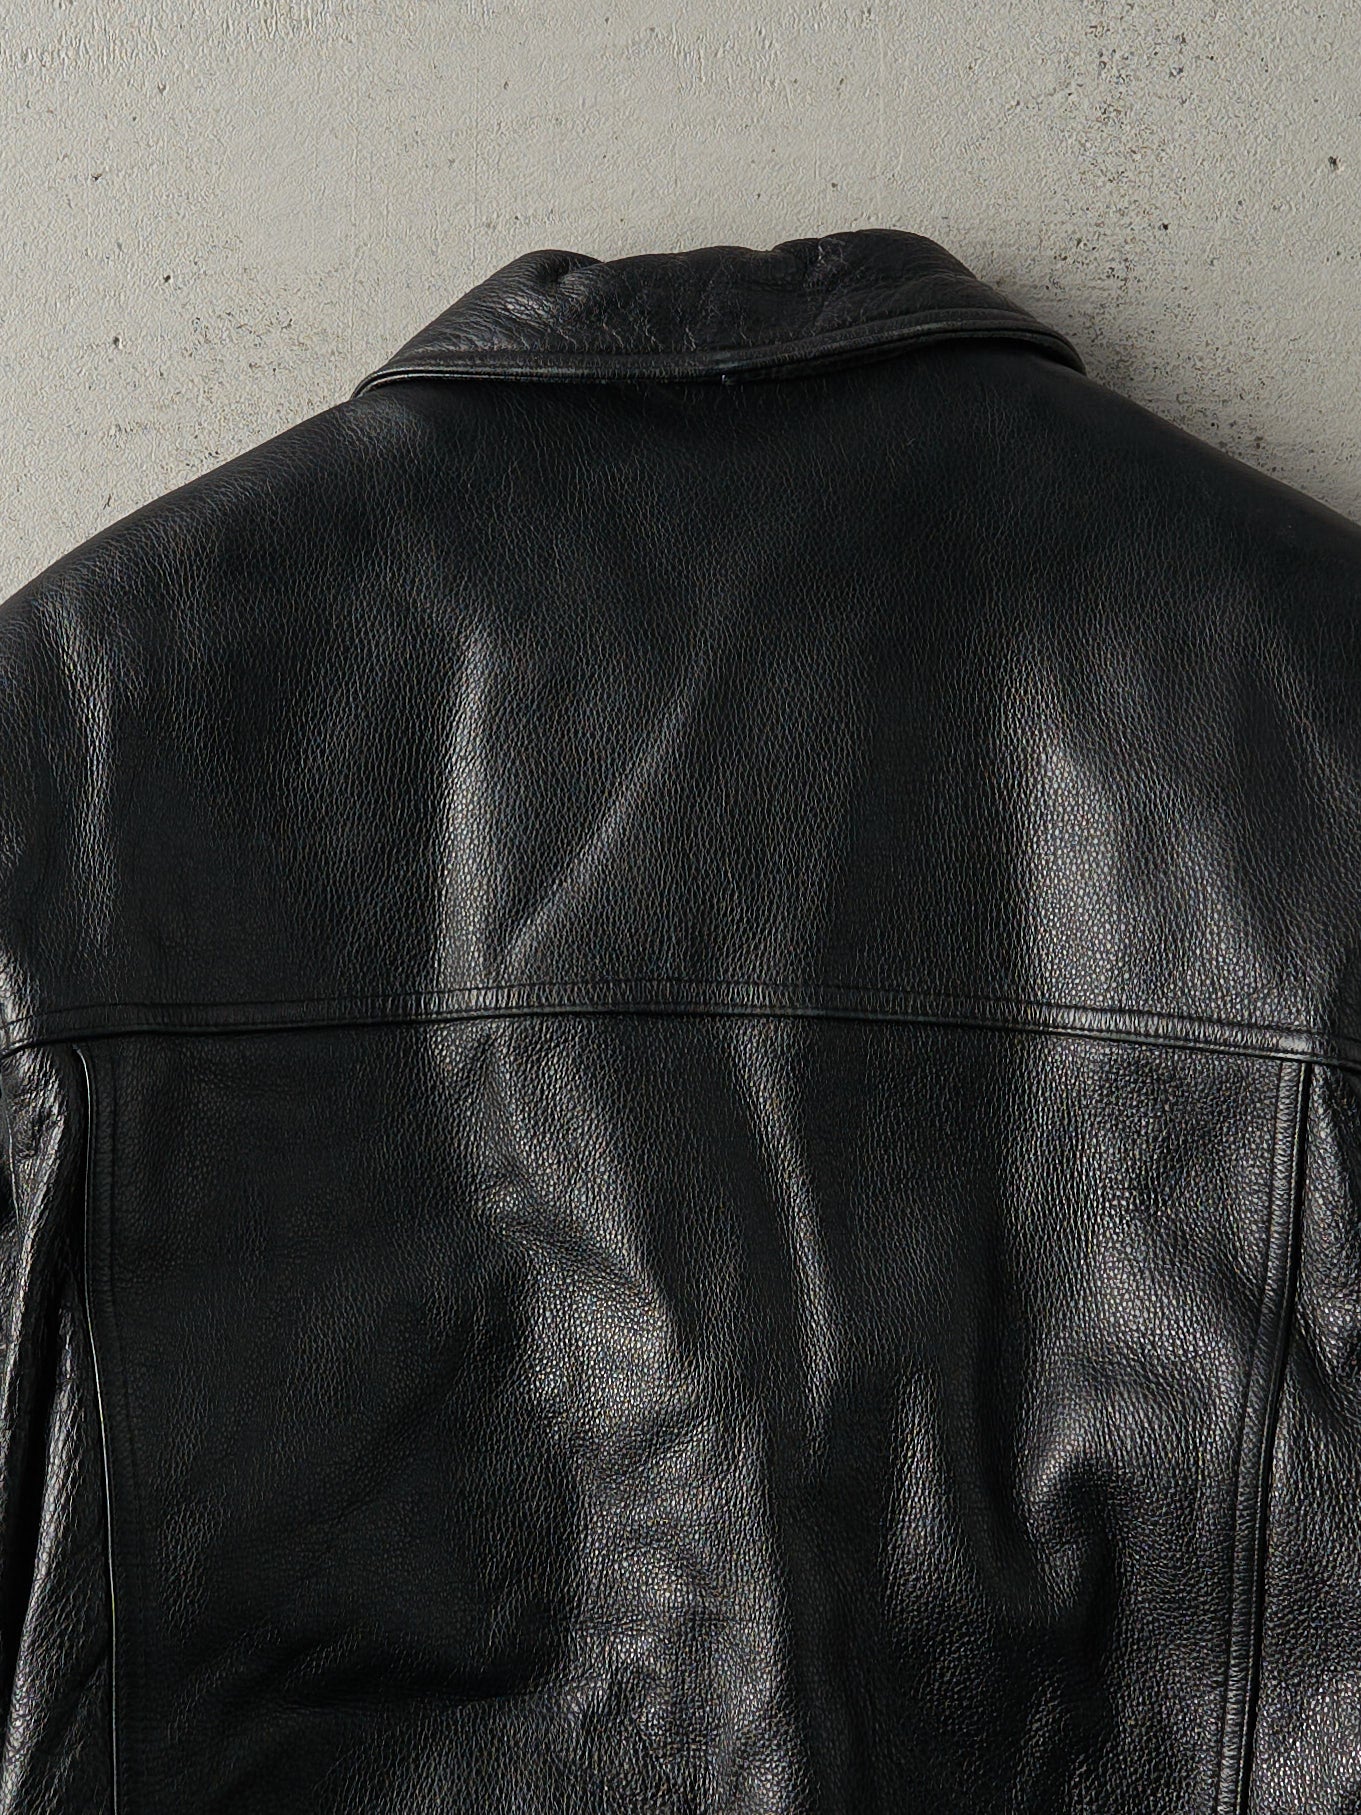 Vintage 90s Black Danier Leather Jacket (S)